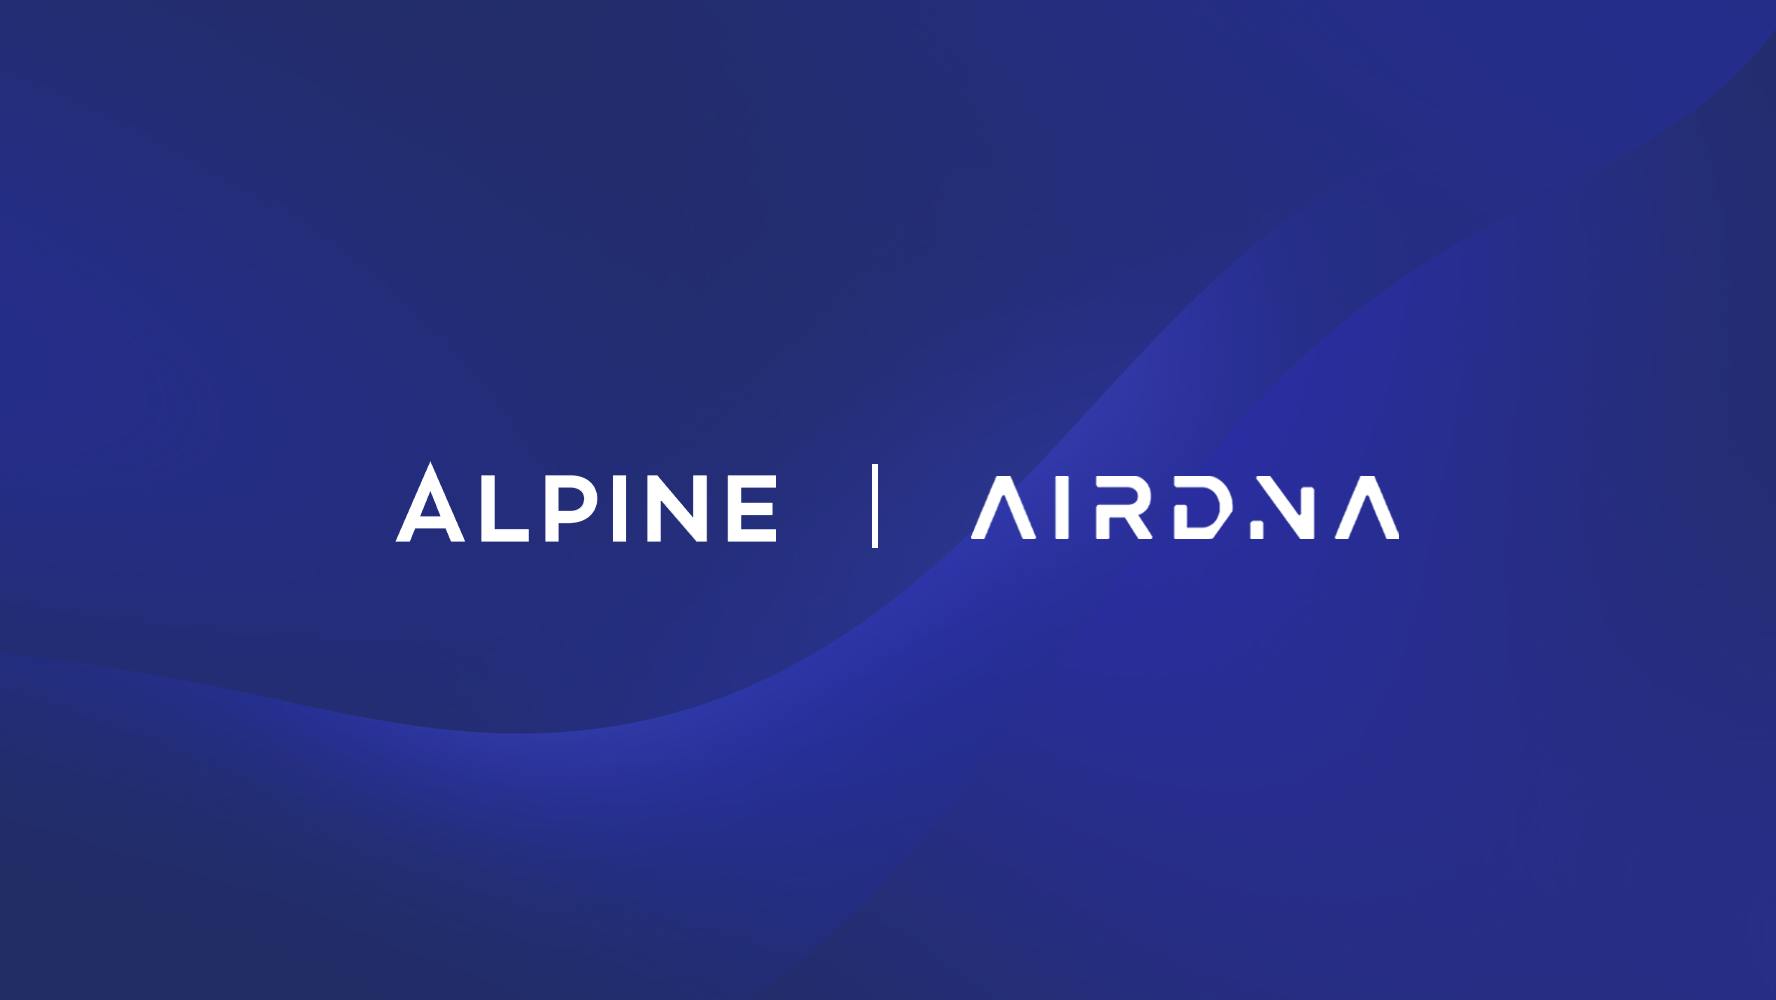 Grappig Wens kaas AirDNA Strikes Strategic Investment Partnership with Alpine Investors